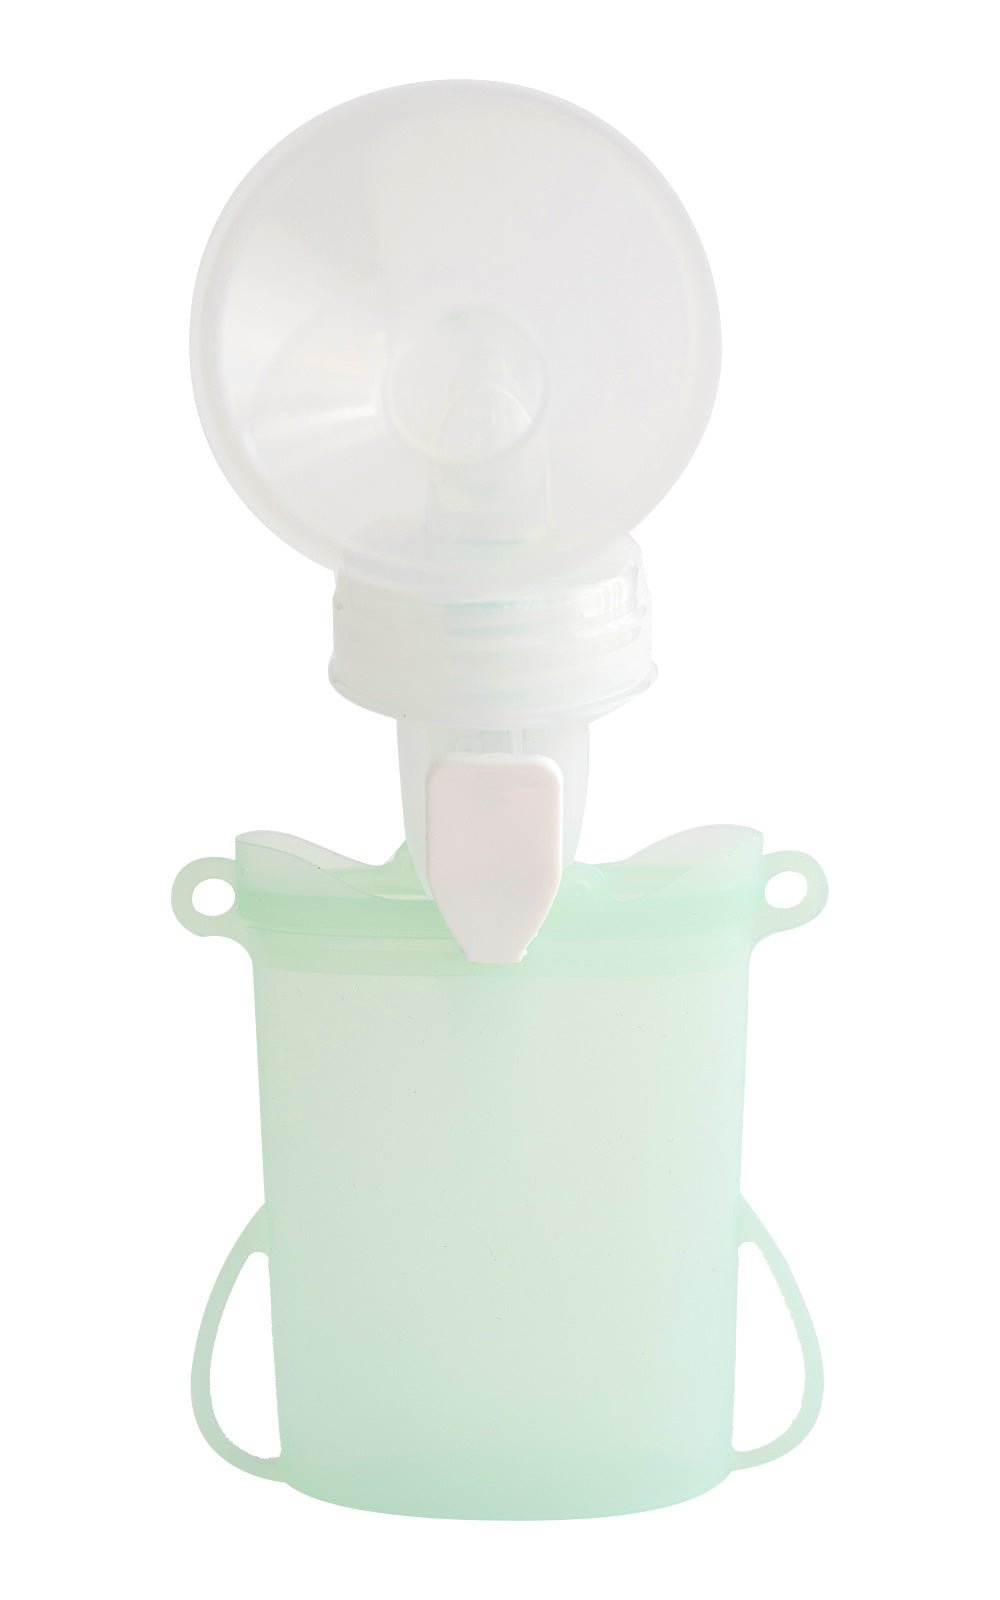 Breastmilk Storage Bag Kit with BabyBuddha Adaptor by Tommee Tippee